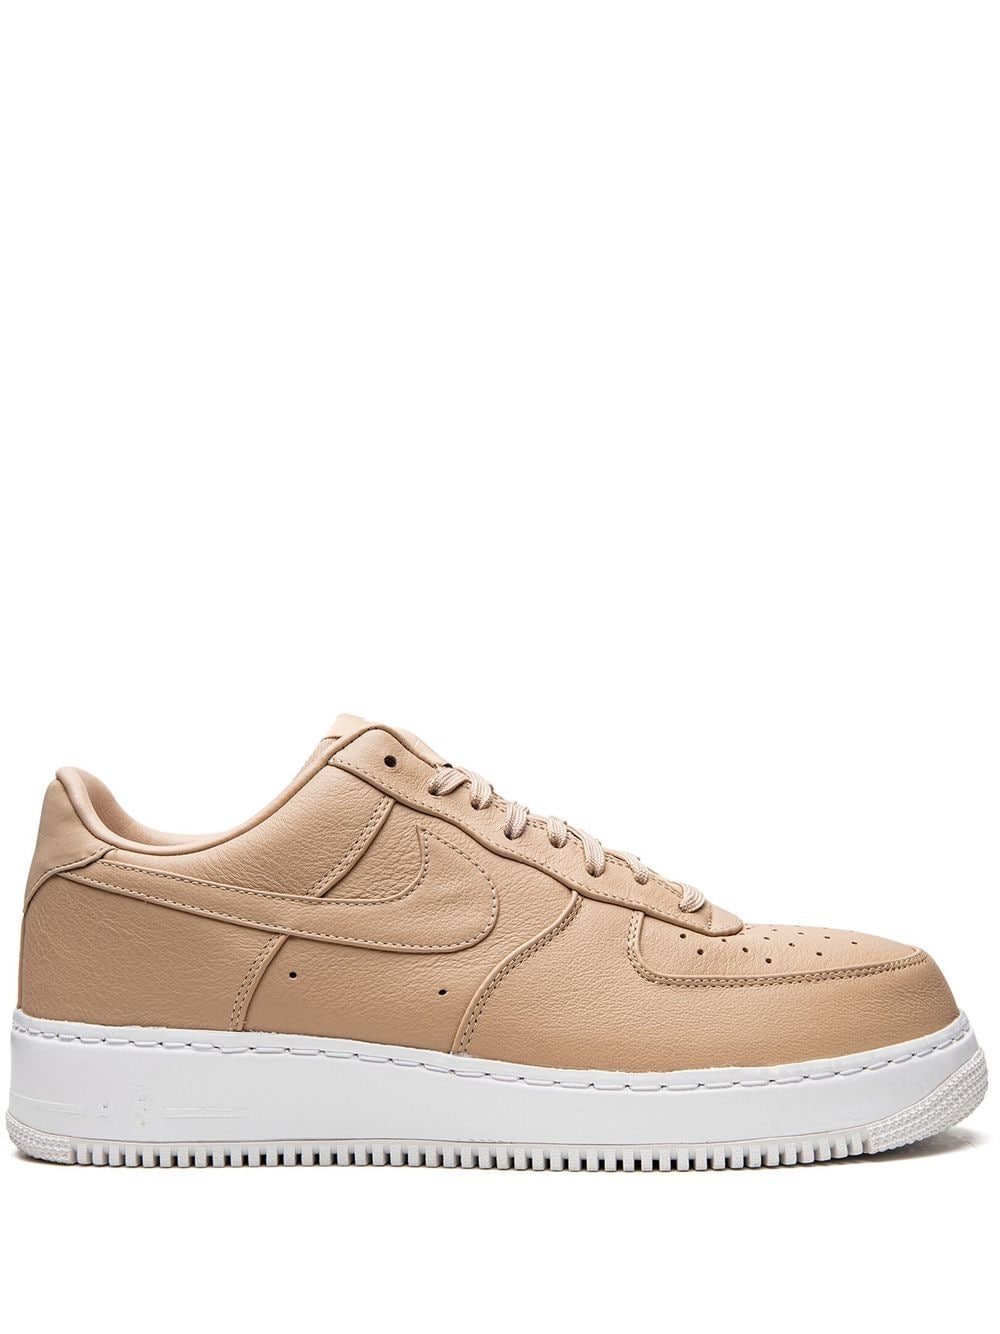 Nike Air Force 1 Low Vachetta Tan Sneakers - Farfetch